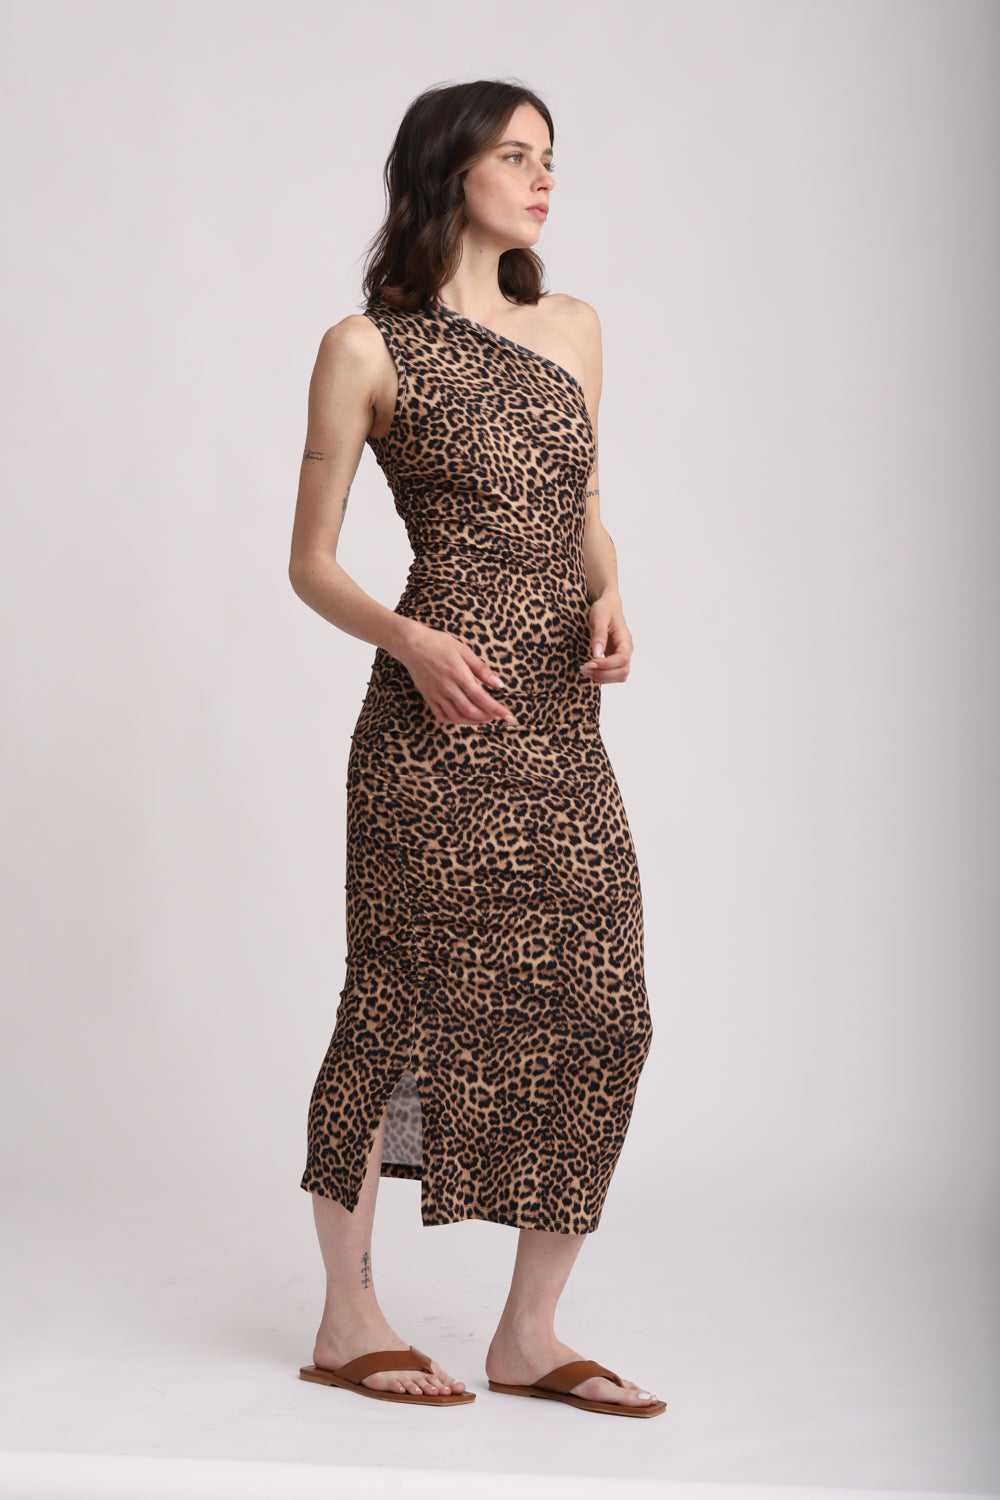 Have Leopard Dress